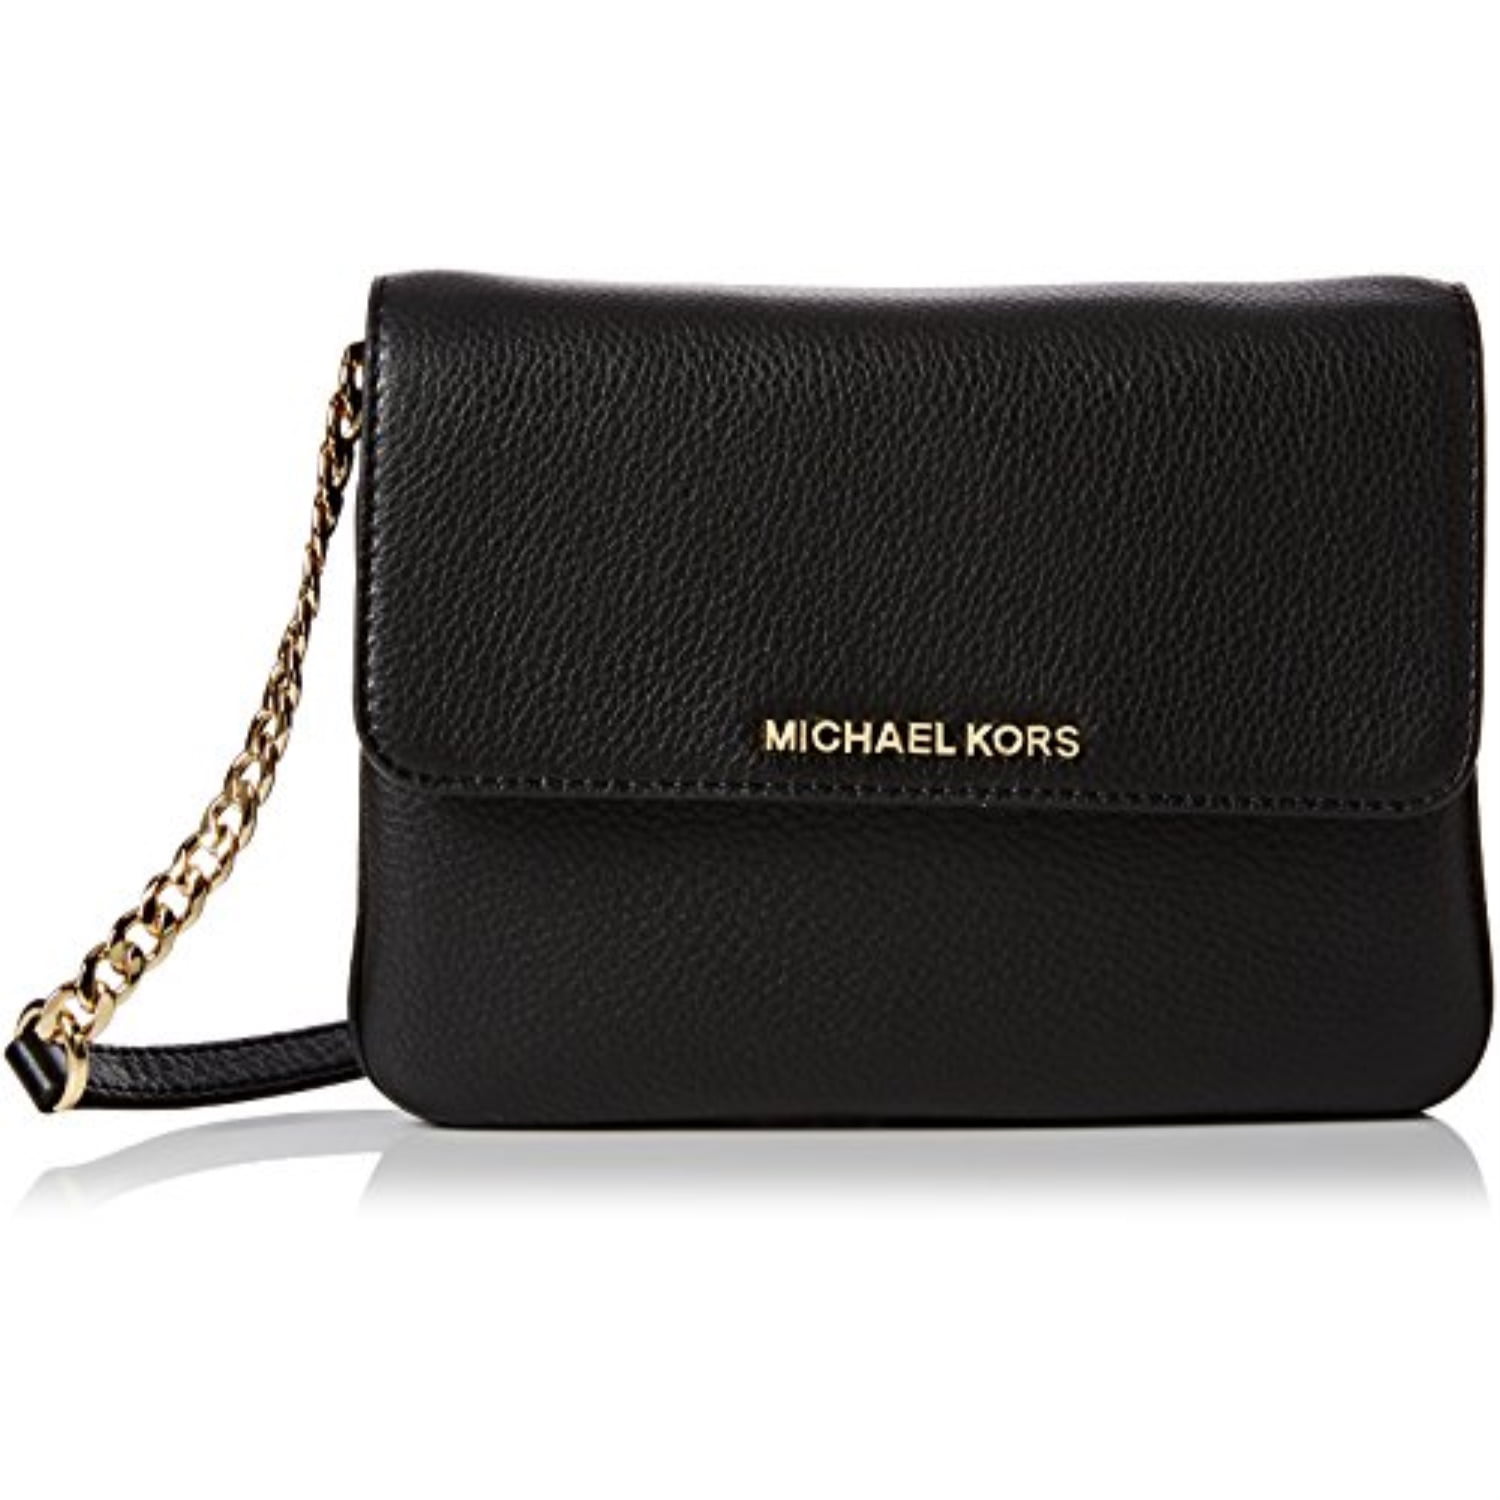 michael kors crossbody wallet purse